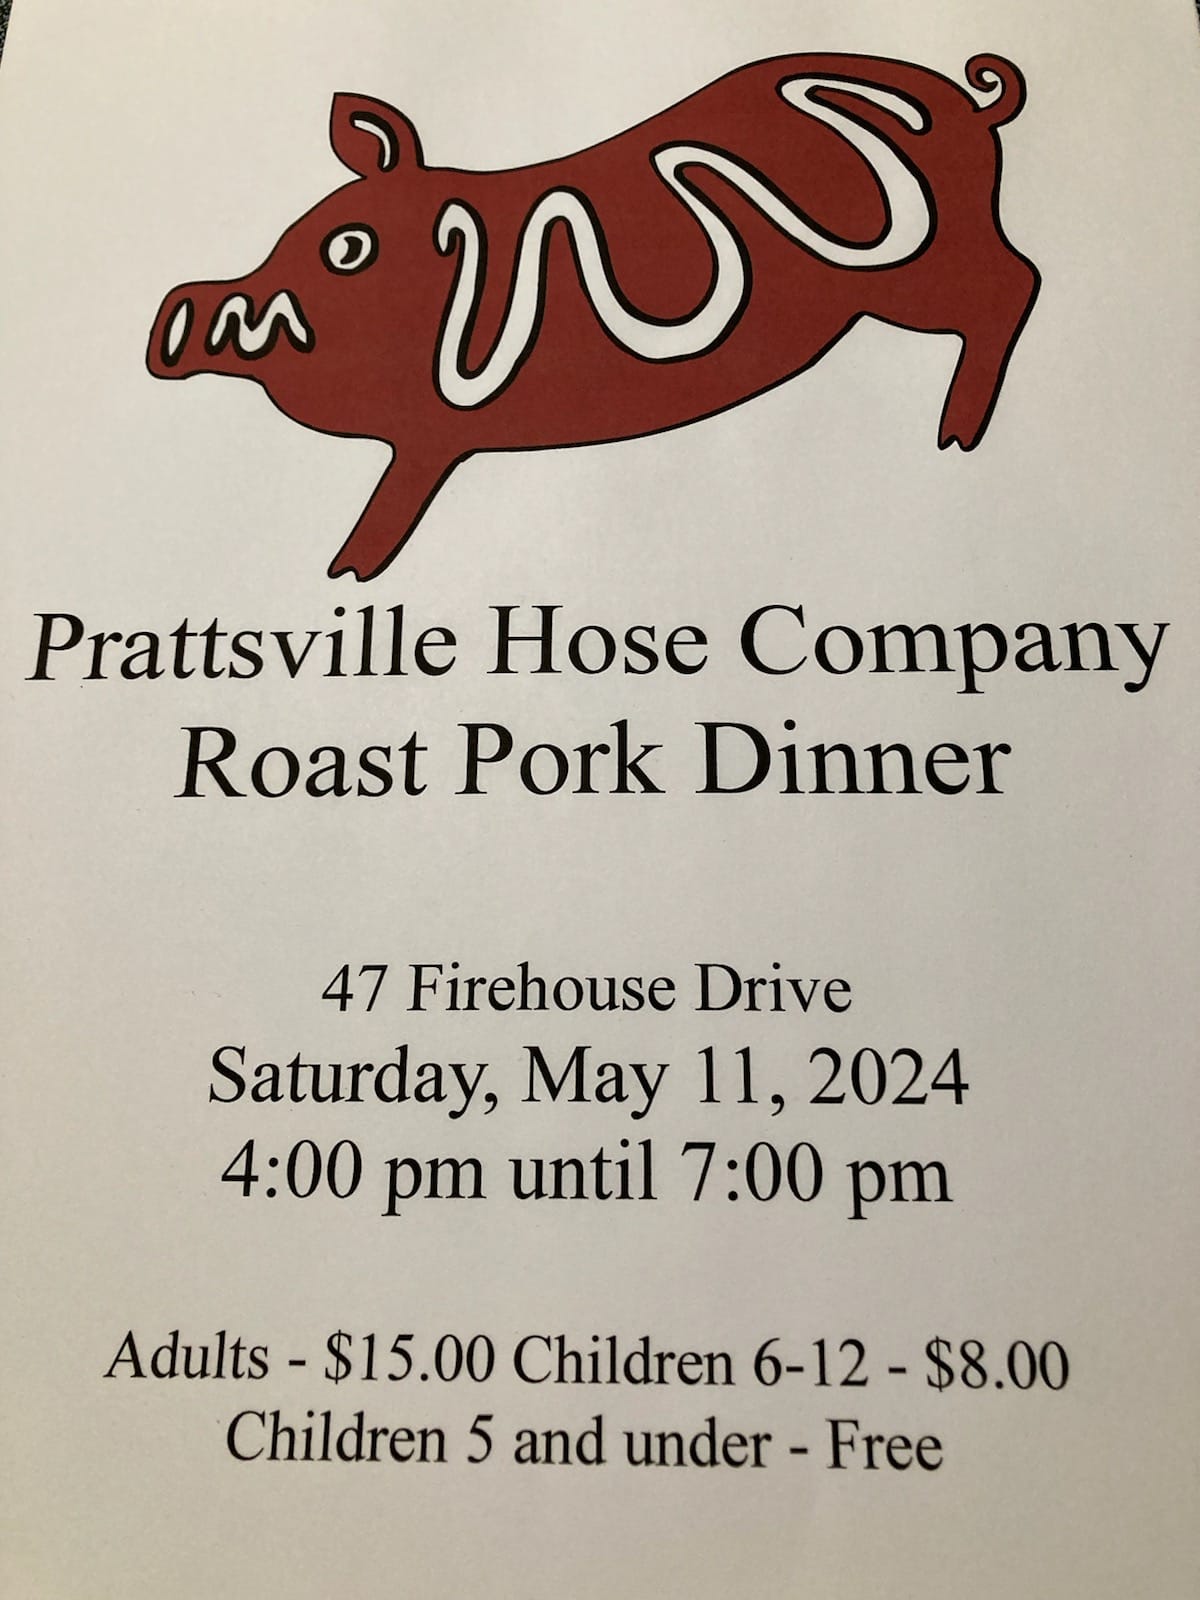 Prattsville Hose Company Roast Pork Dinner.jpg